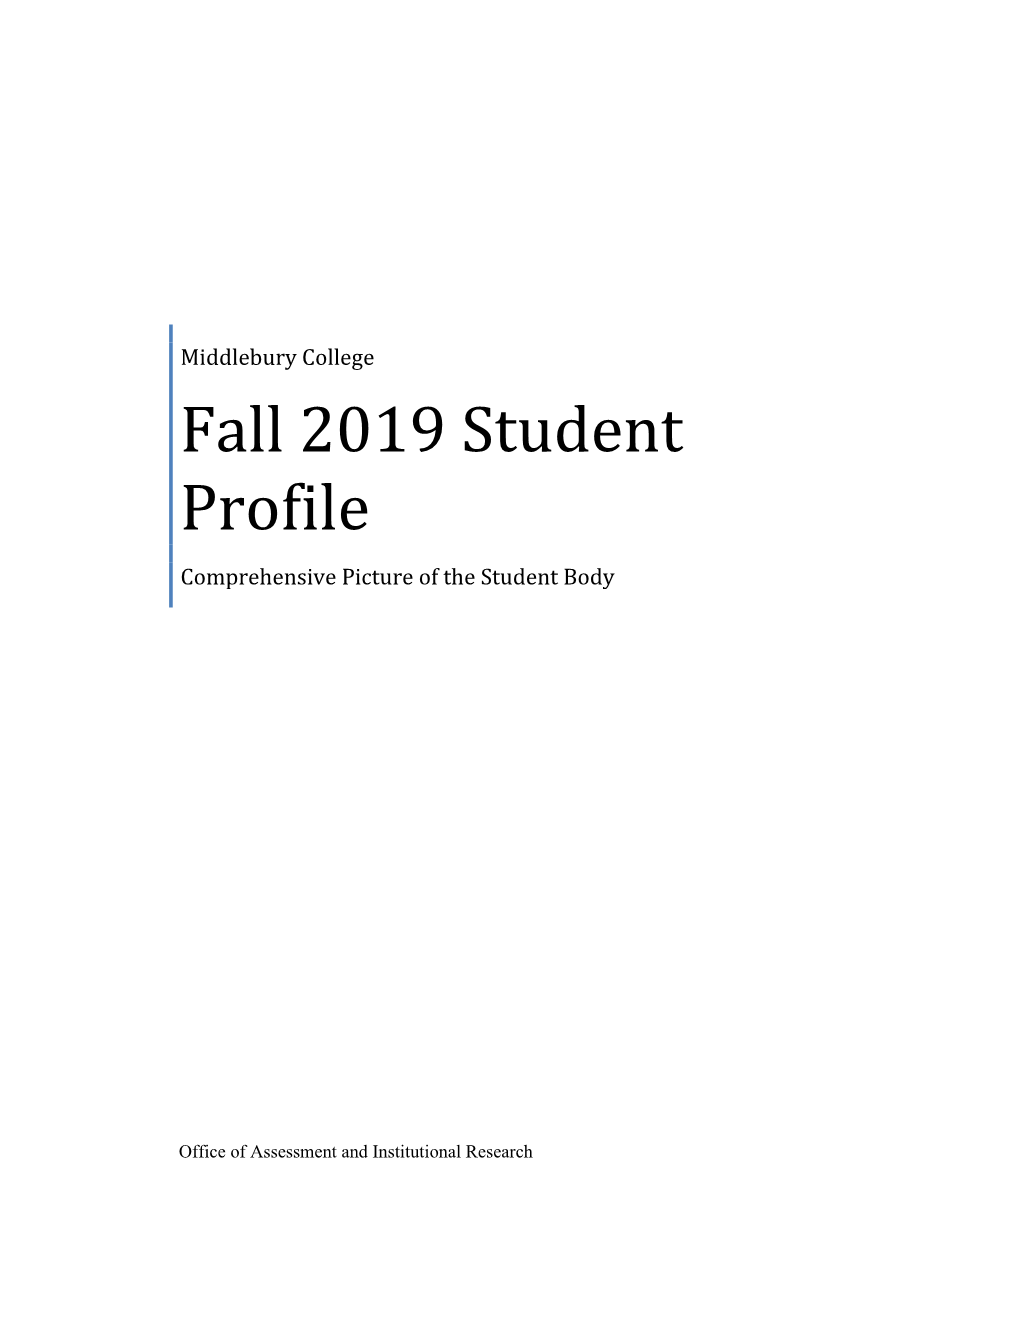 Fall 2019 Student Profile